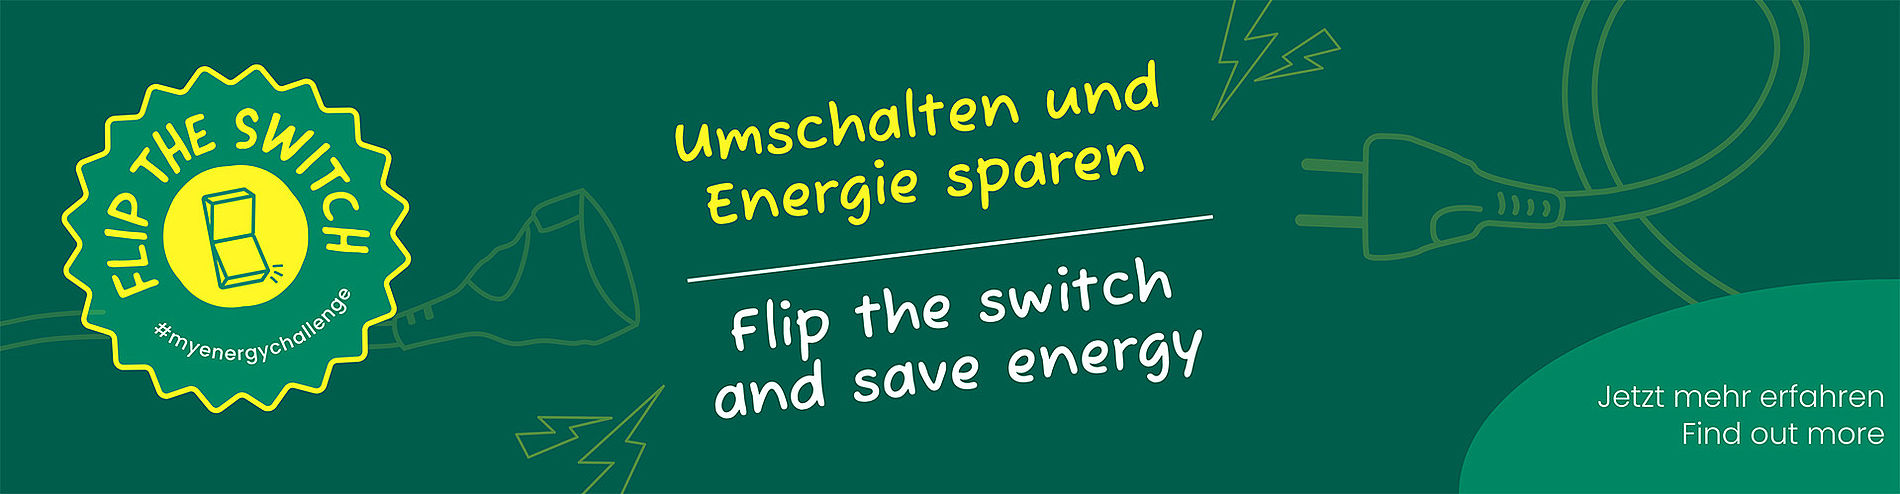 Energiesparen. Flip the Switch. Kampagne.